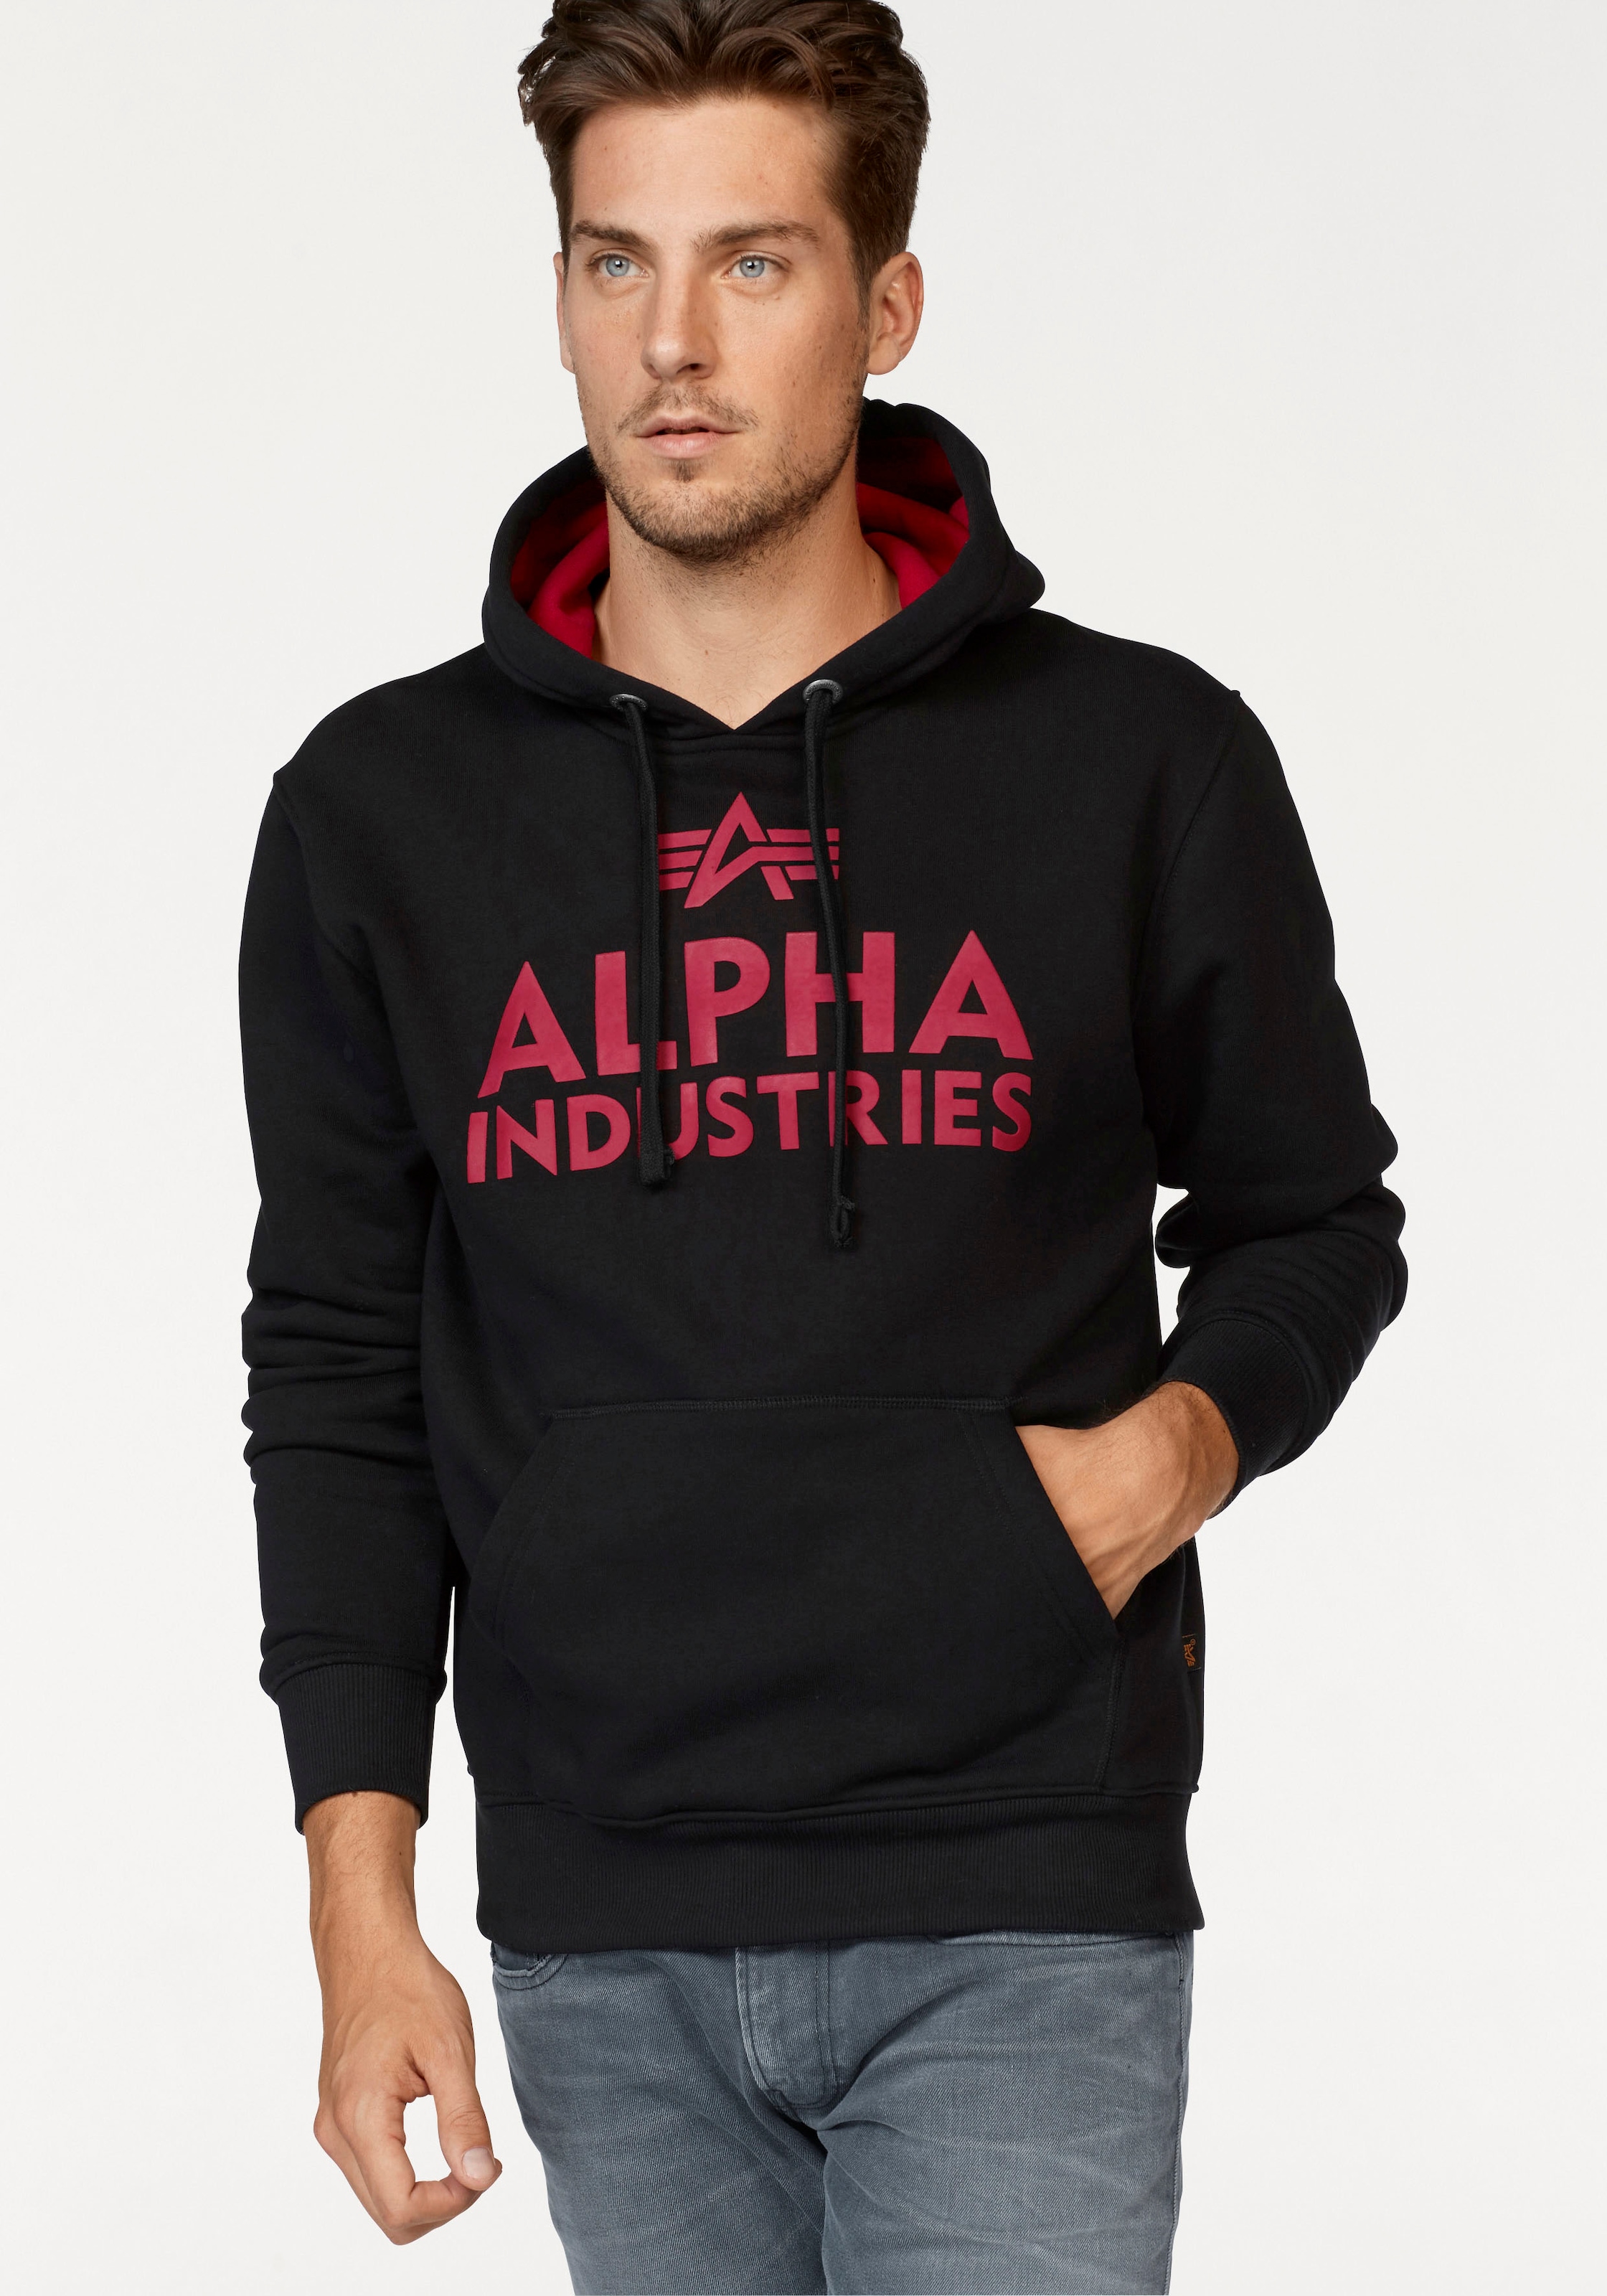 Industries ♕ Alpha bei Kapuzensweatshirt